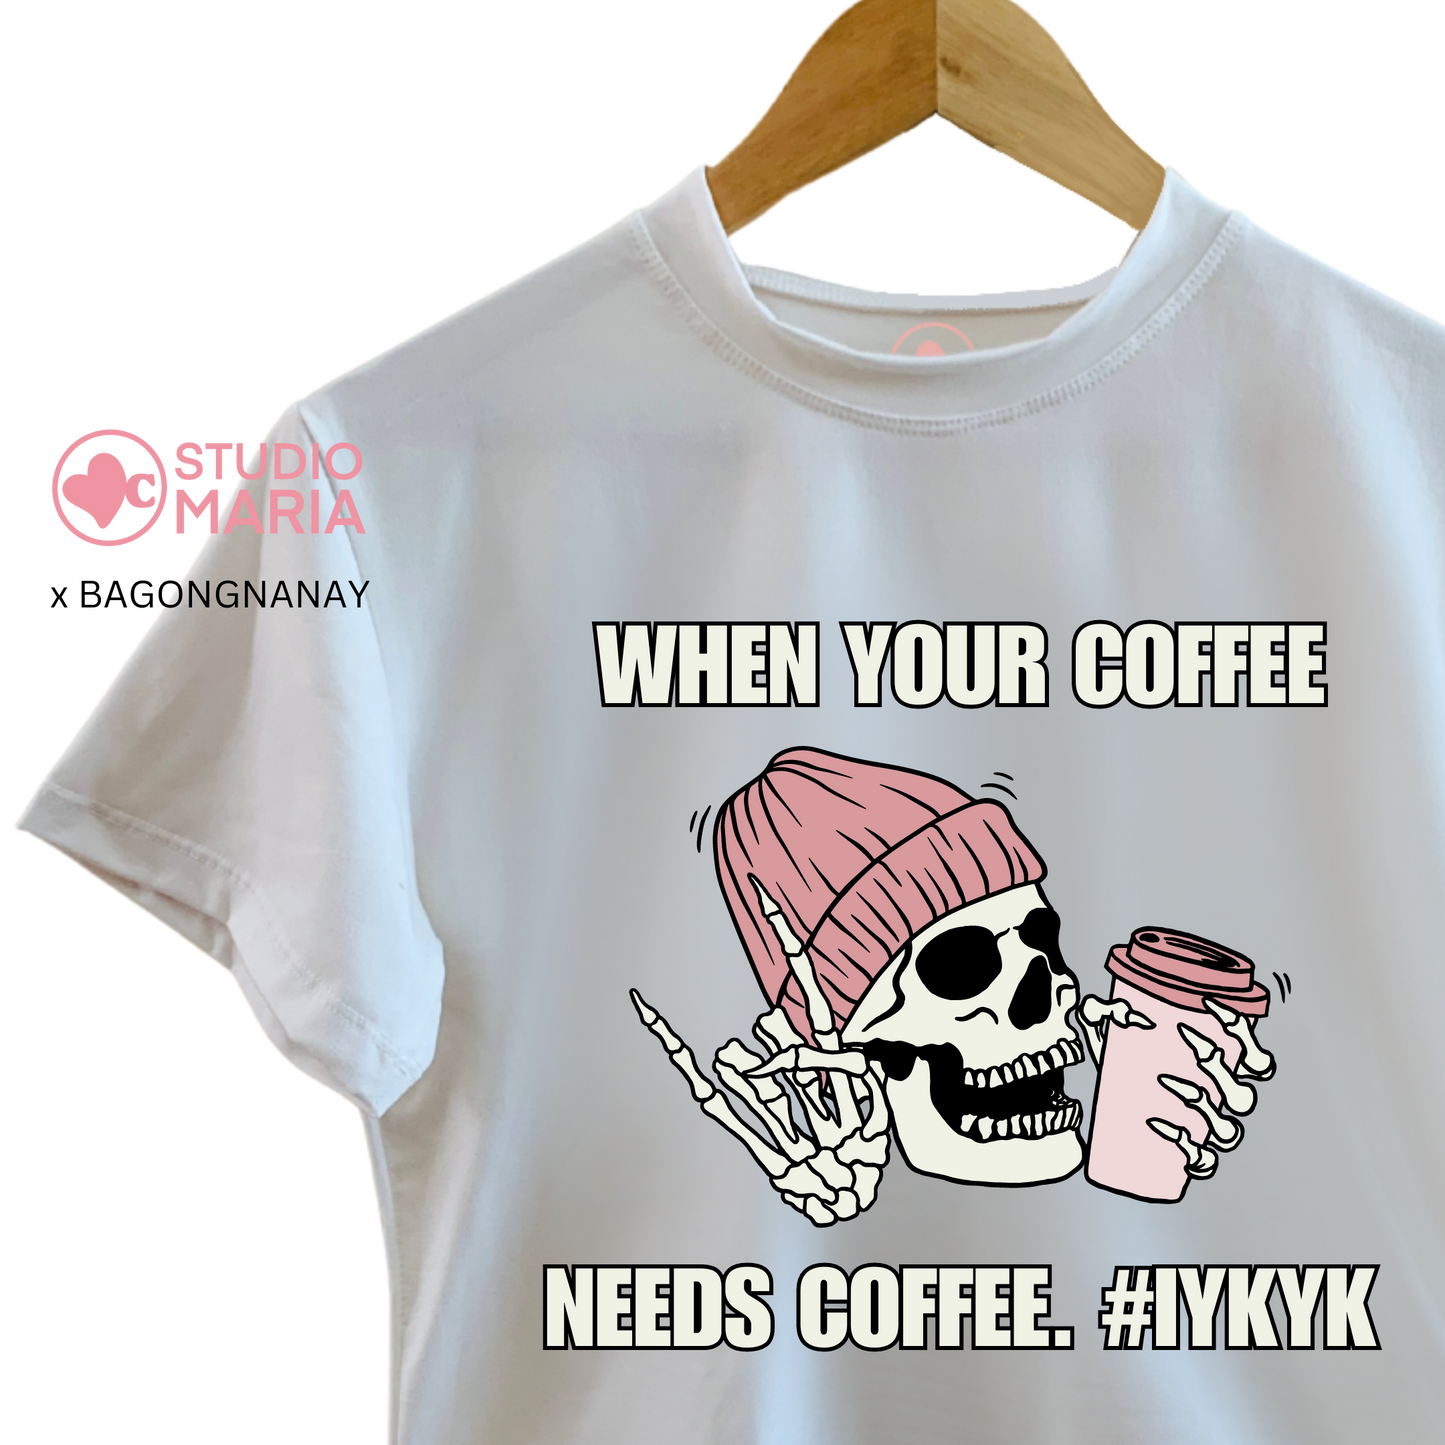 Bagong Nanay Your Coffee Needs Coffee Mom Statement Shirt